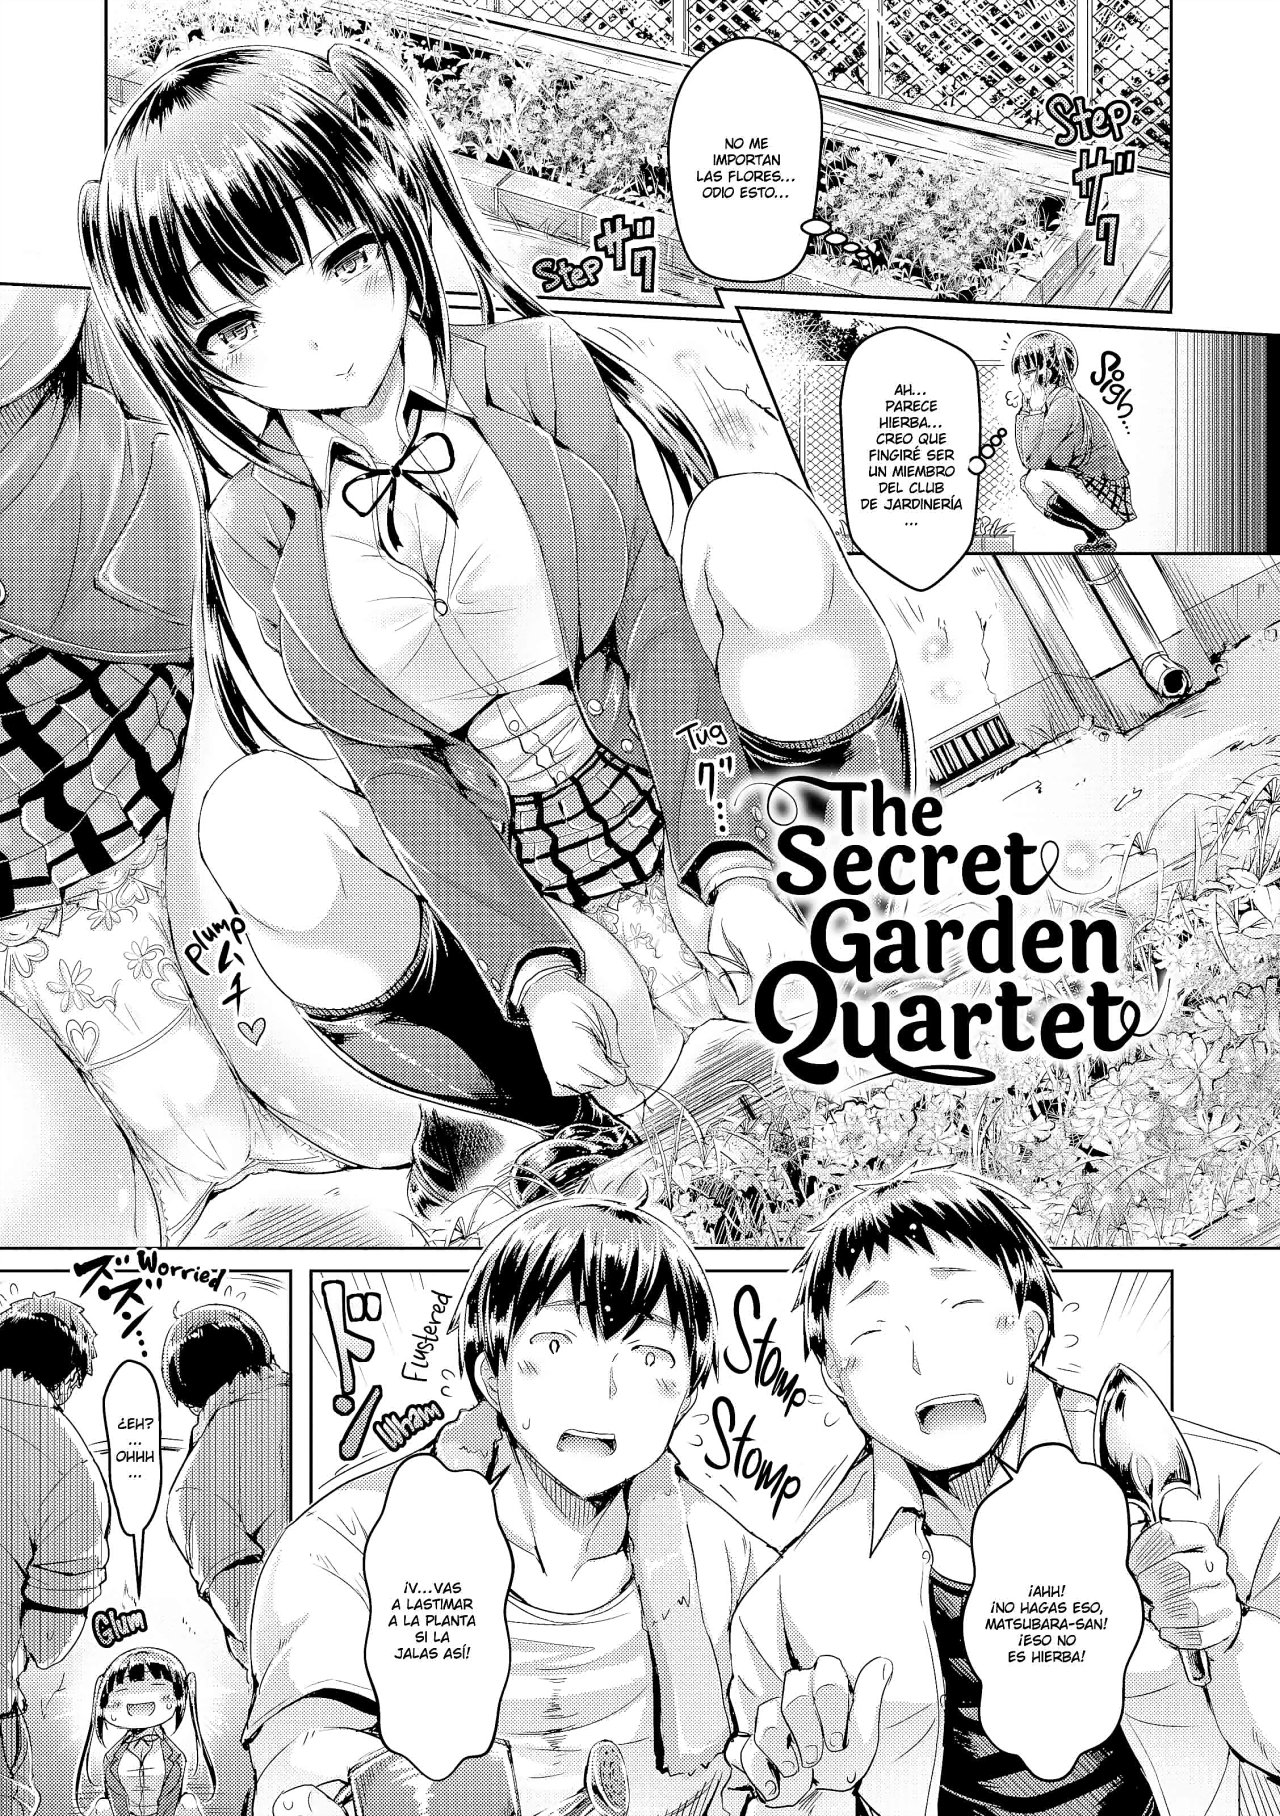 The Secret Garden Quartet - 0